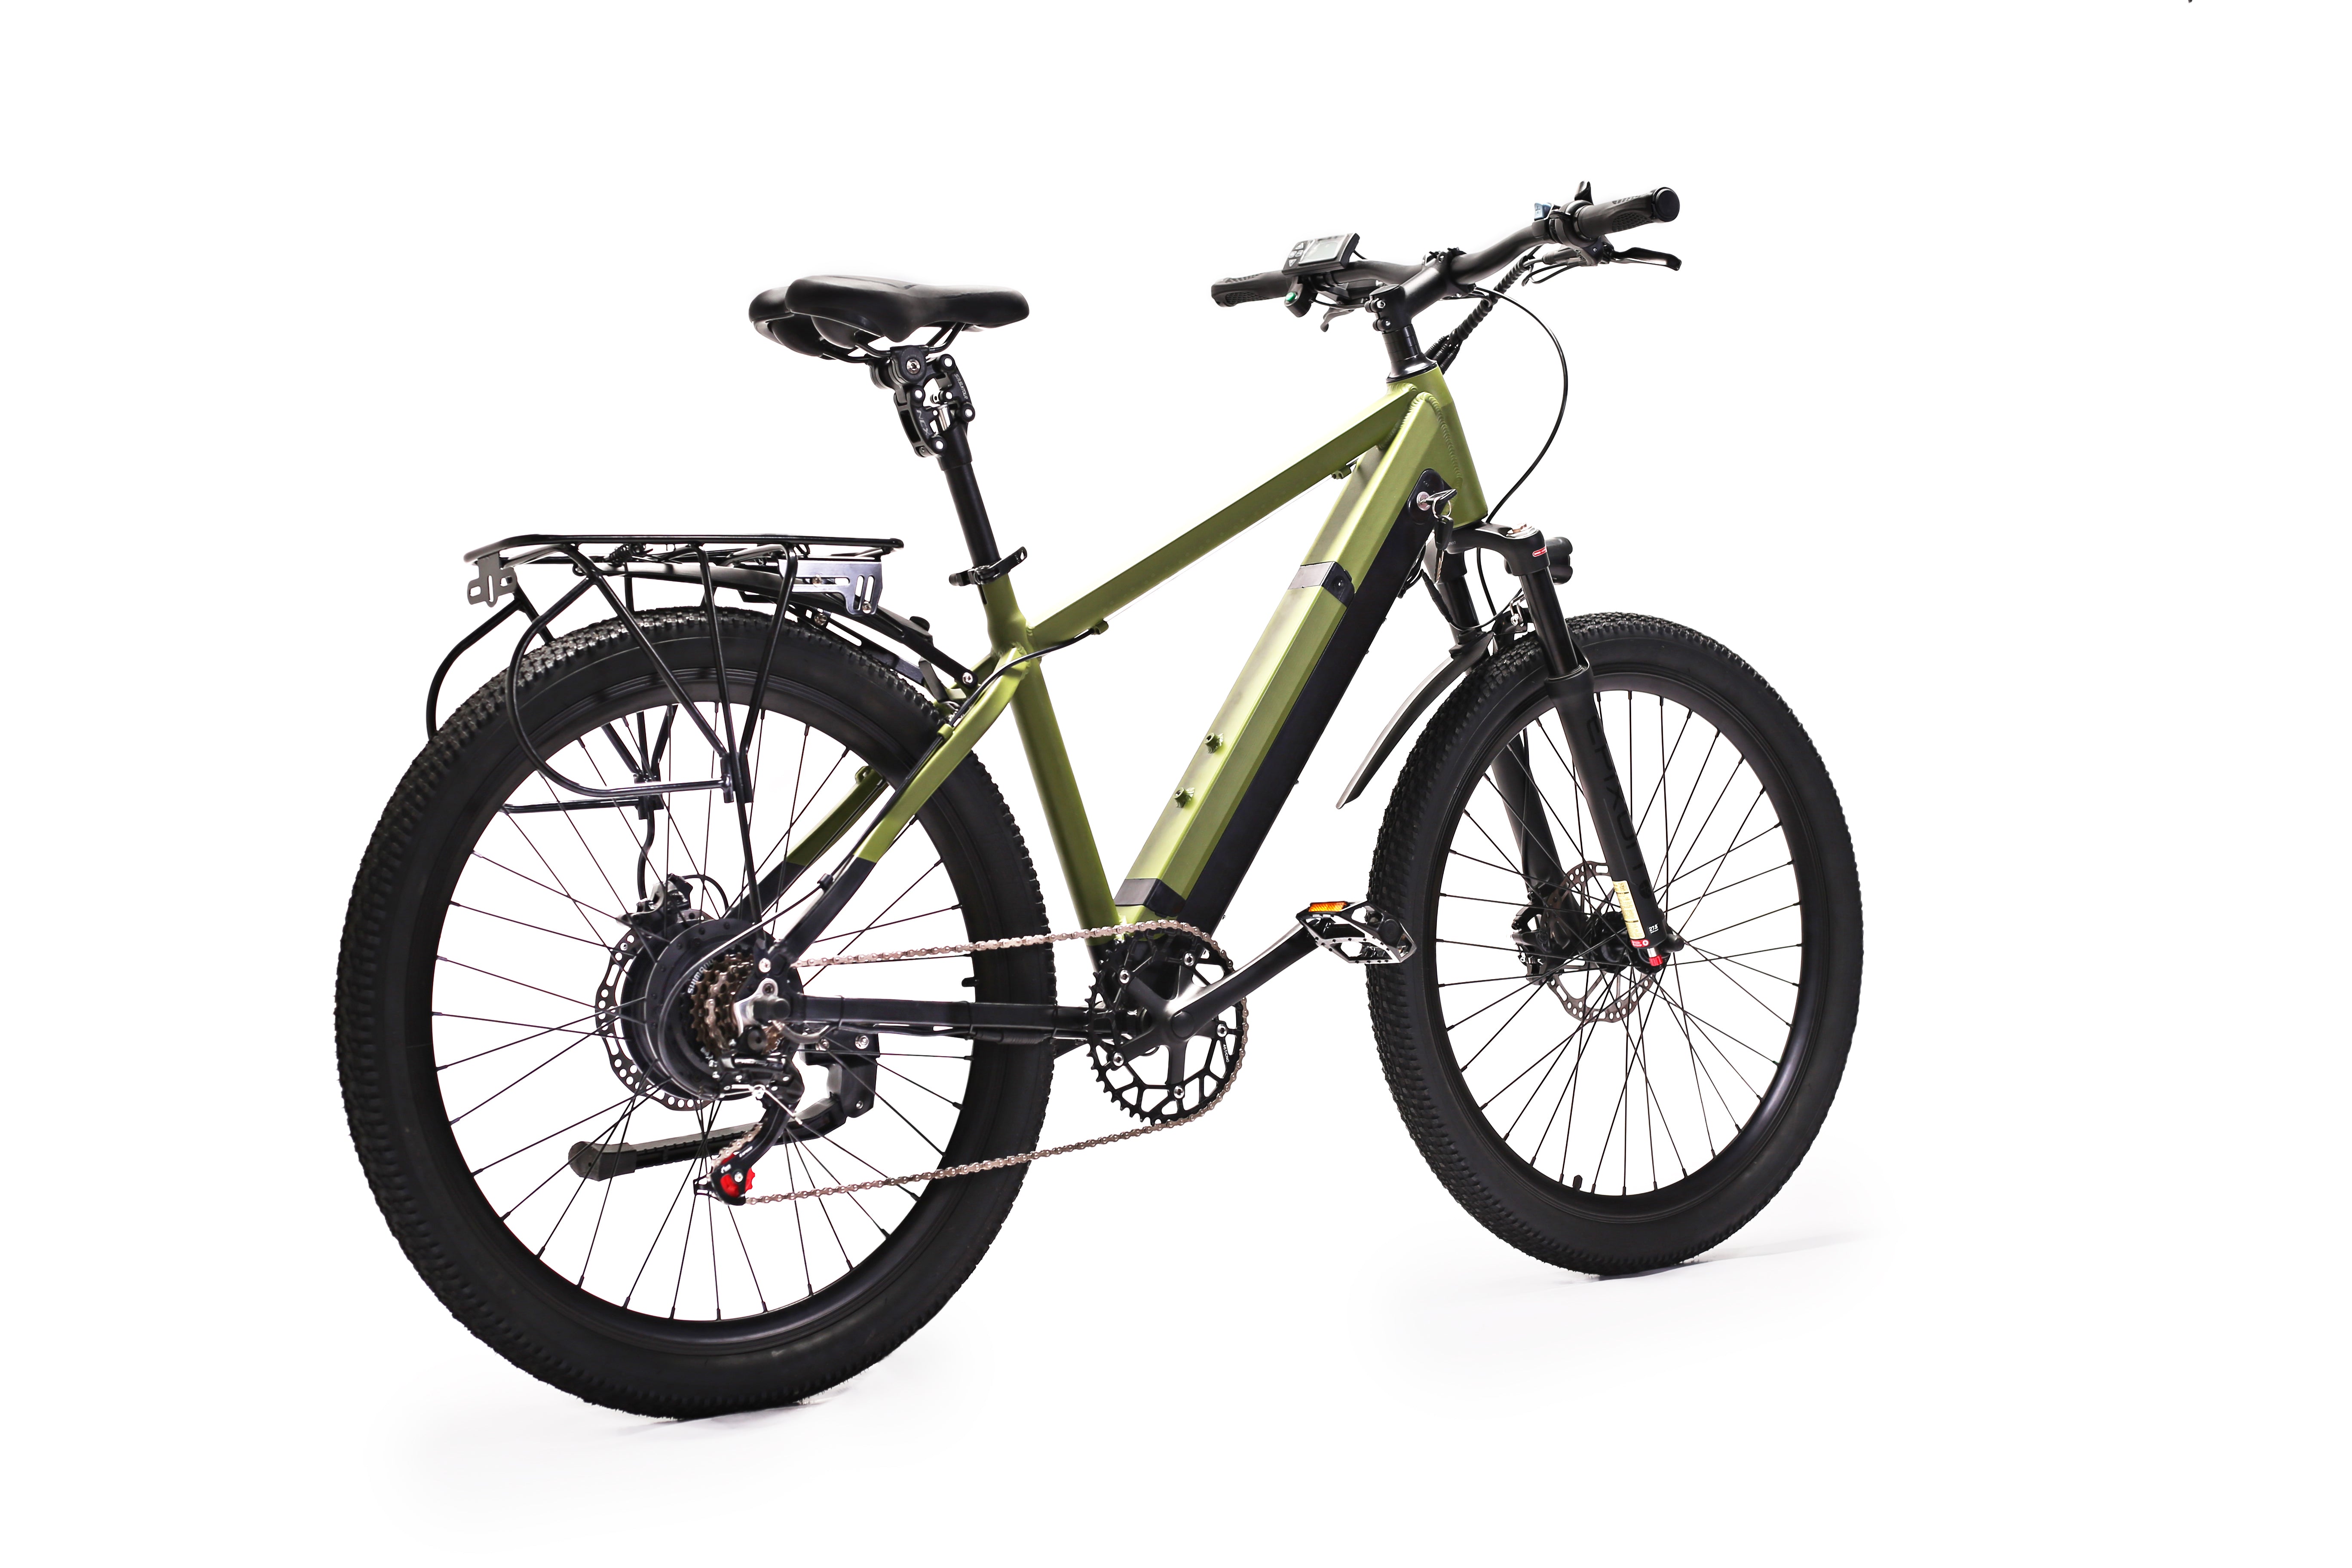 Ranger (Premium) All Terrain Electric Bicycle